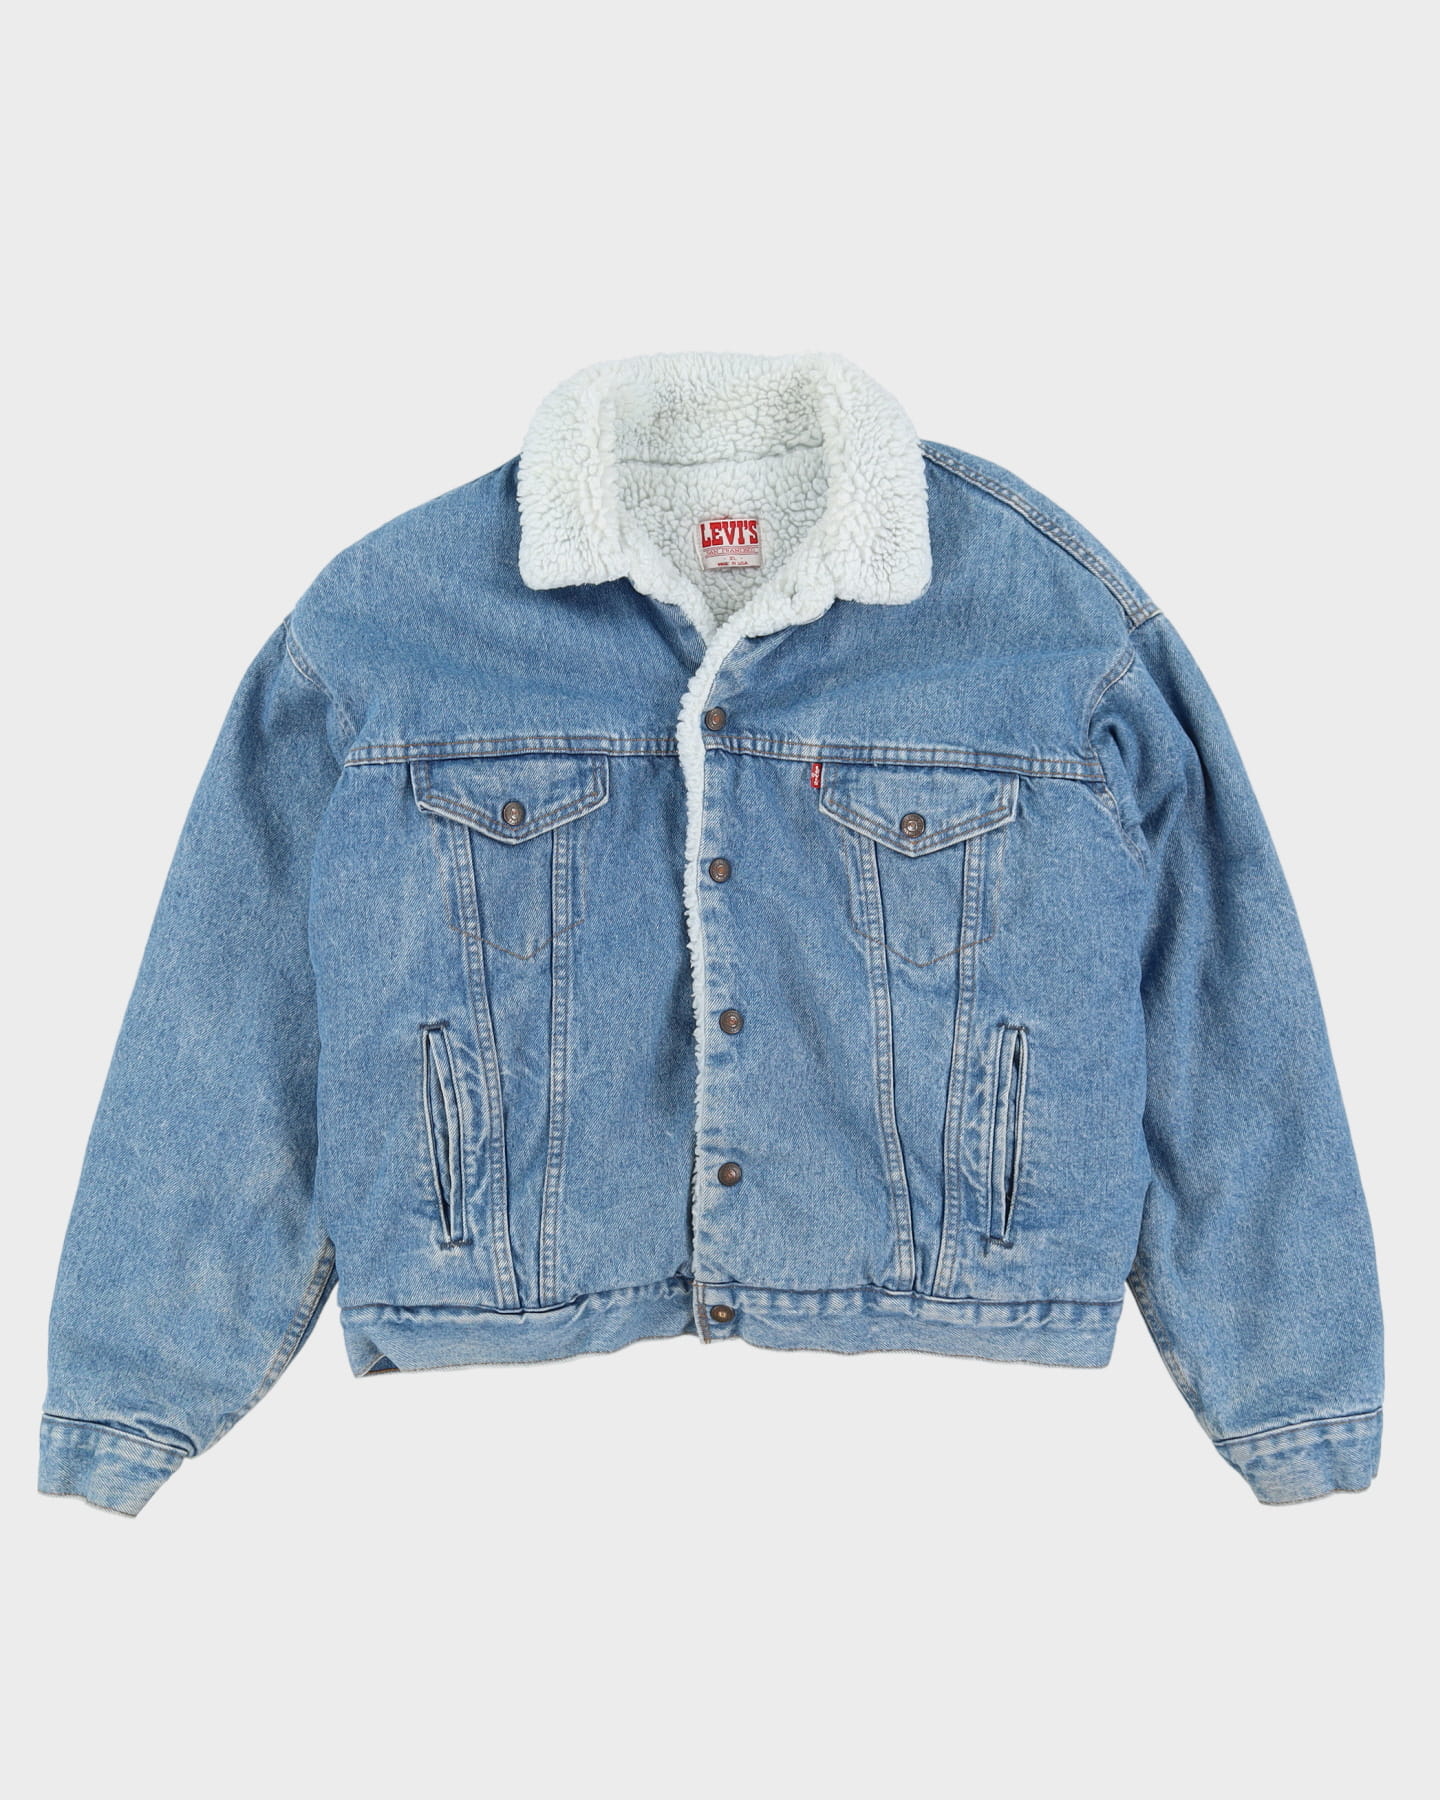 Vintage 80s Levi's Fleece Lined Blue Denim Jacket - XL